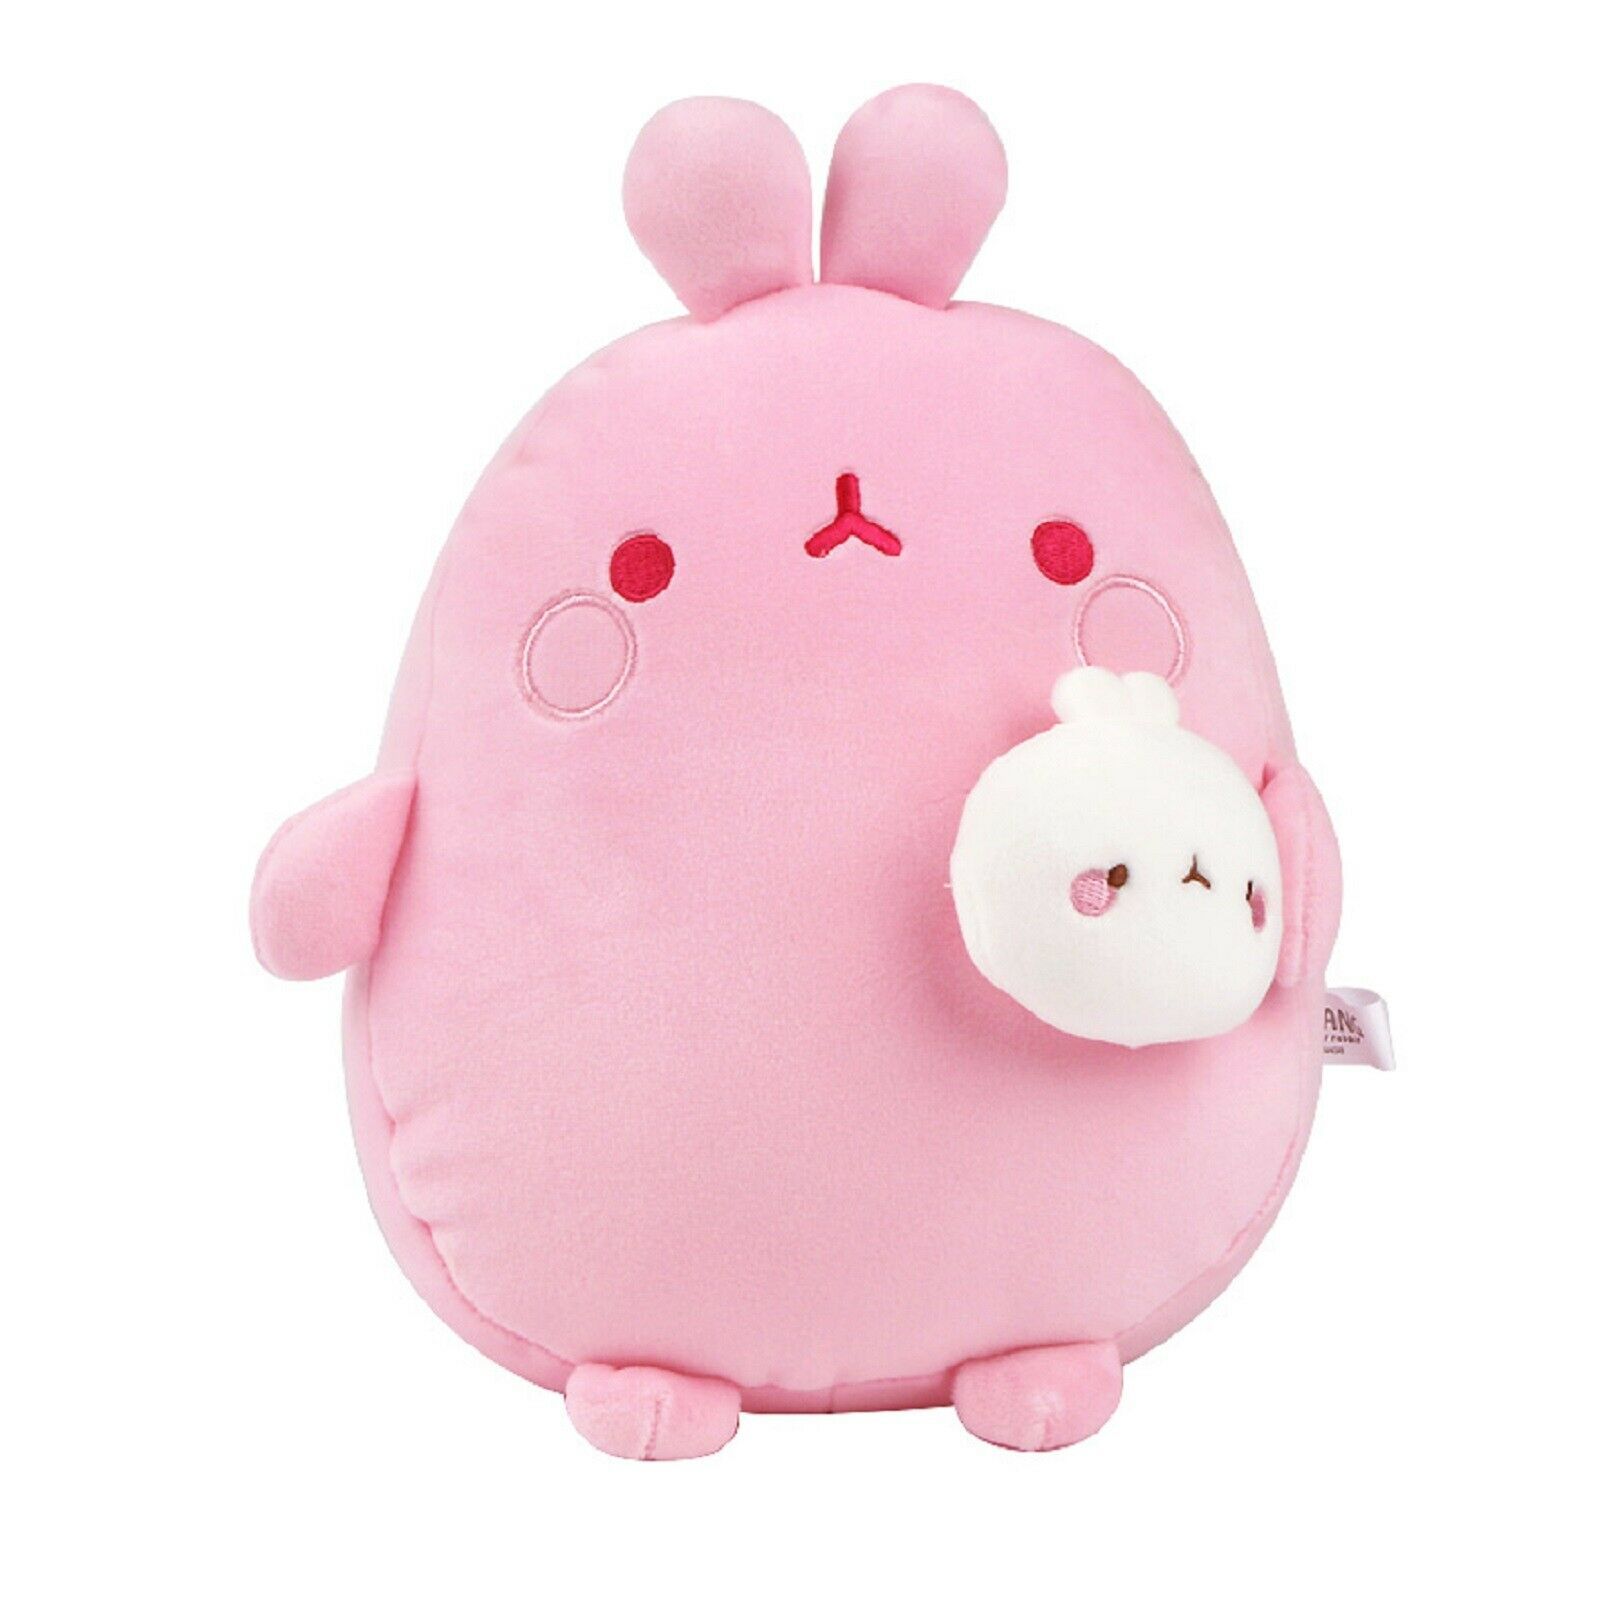 Molang and Piu Piu Stuffed Animal Plush Rabbit Toy Soft Cushion 9.8  (Pink)- Dolls, Clothing & Accessories